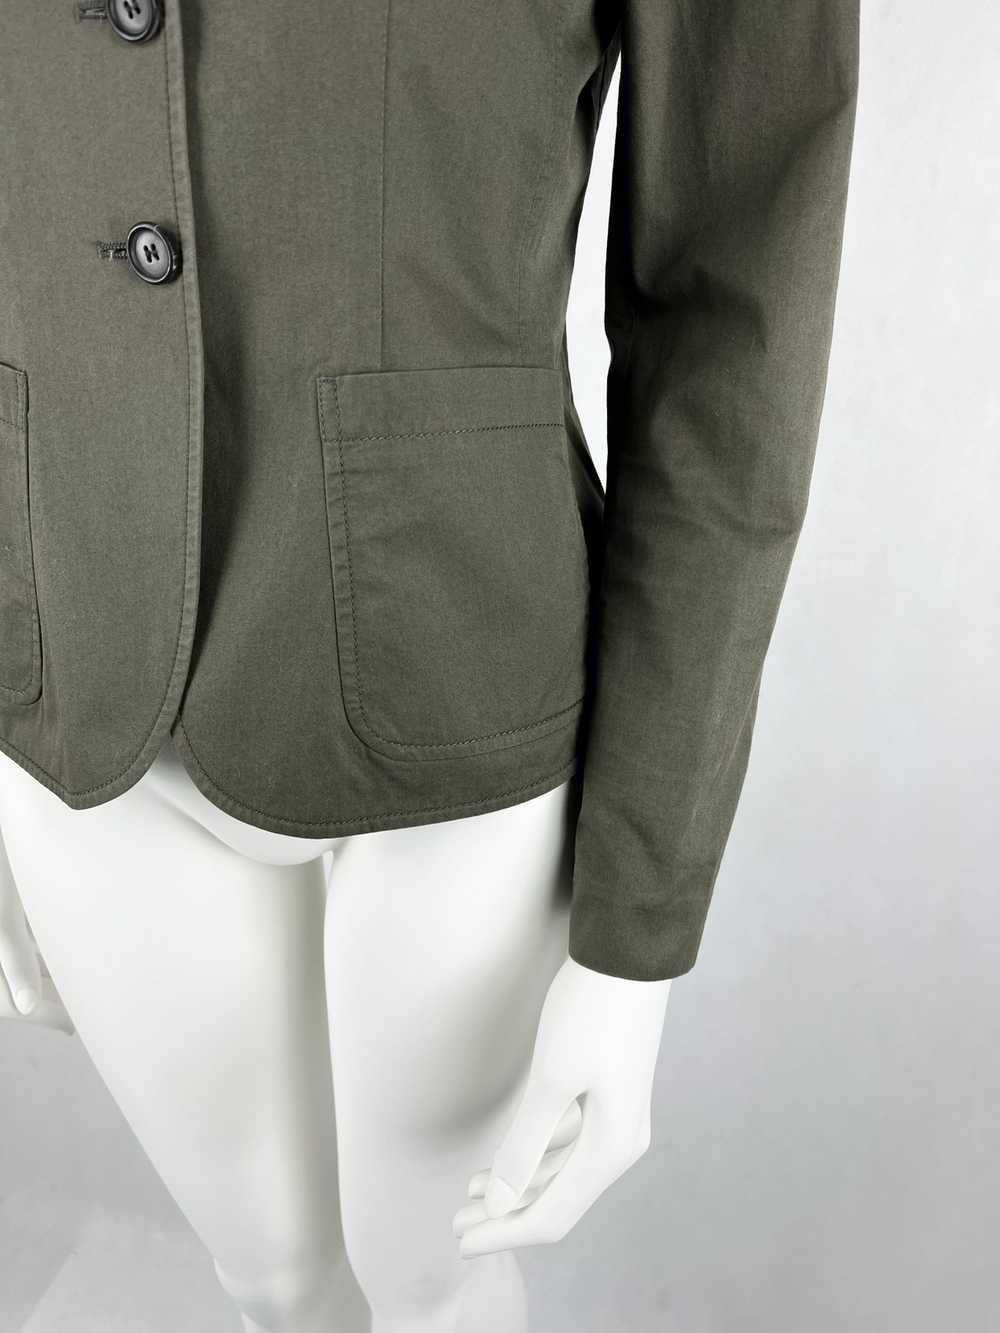 Prada Prada olive green blazer jacket - image 4